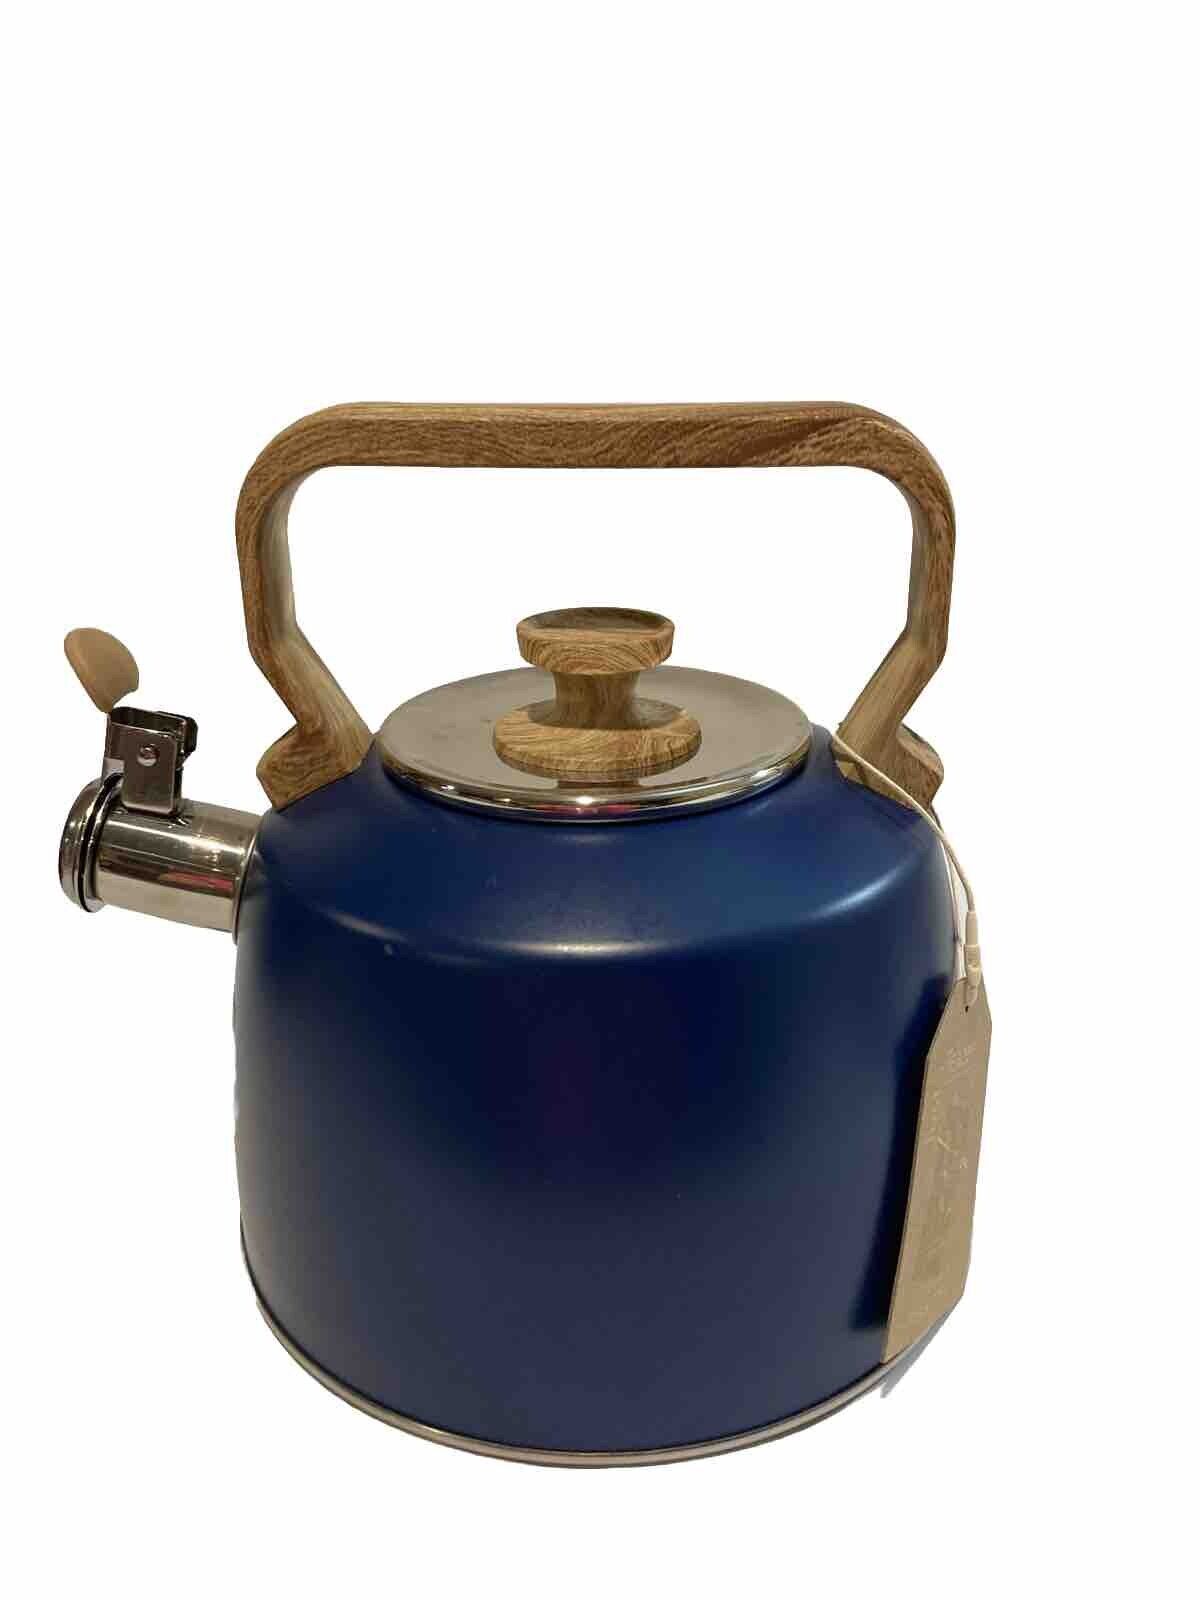 New “Just Tea zen” Cobalt Blue Tea Pot With Laminated Wood Handles